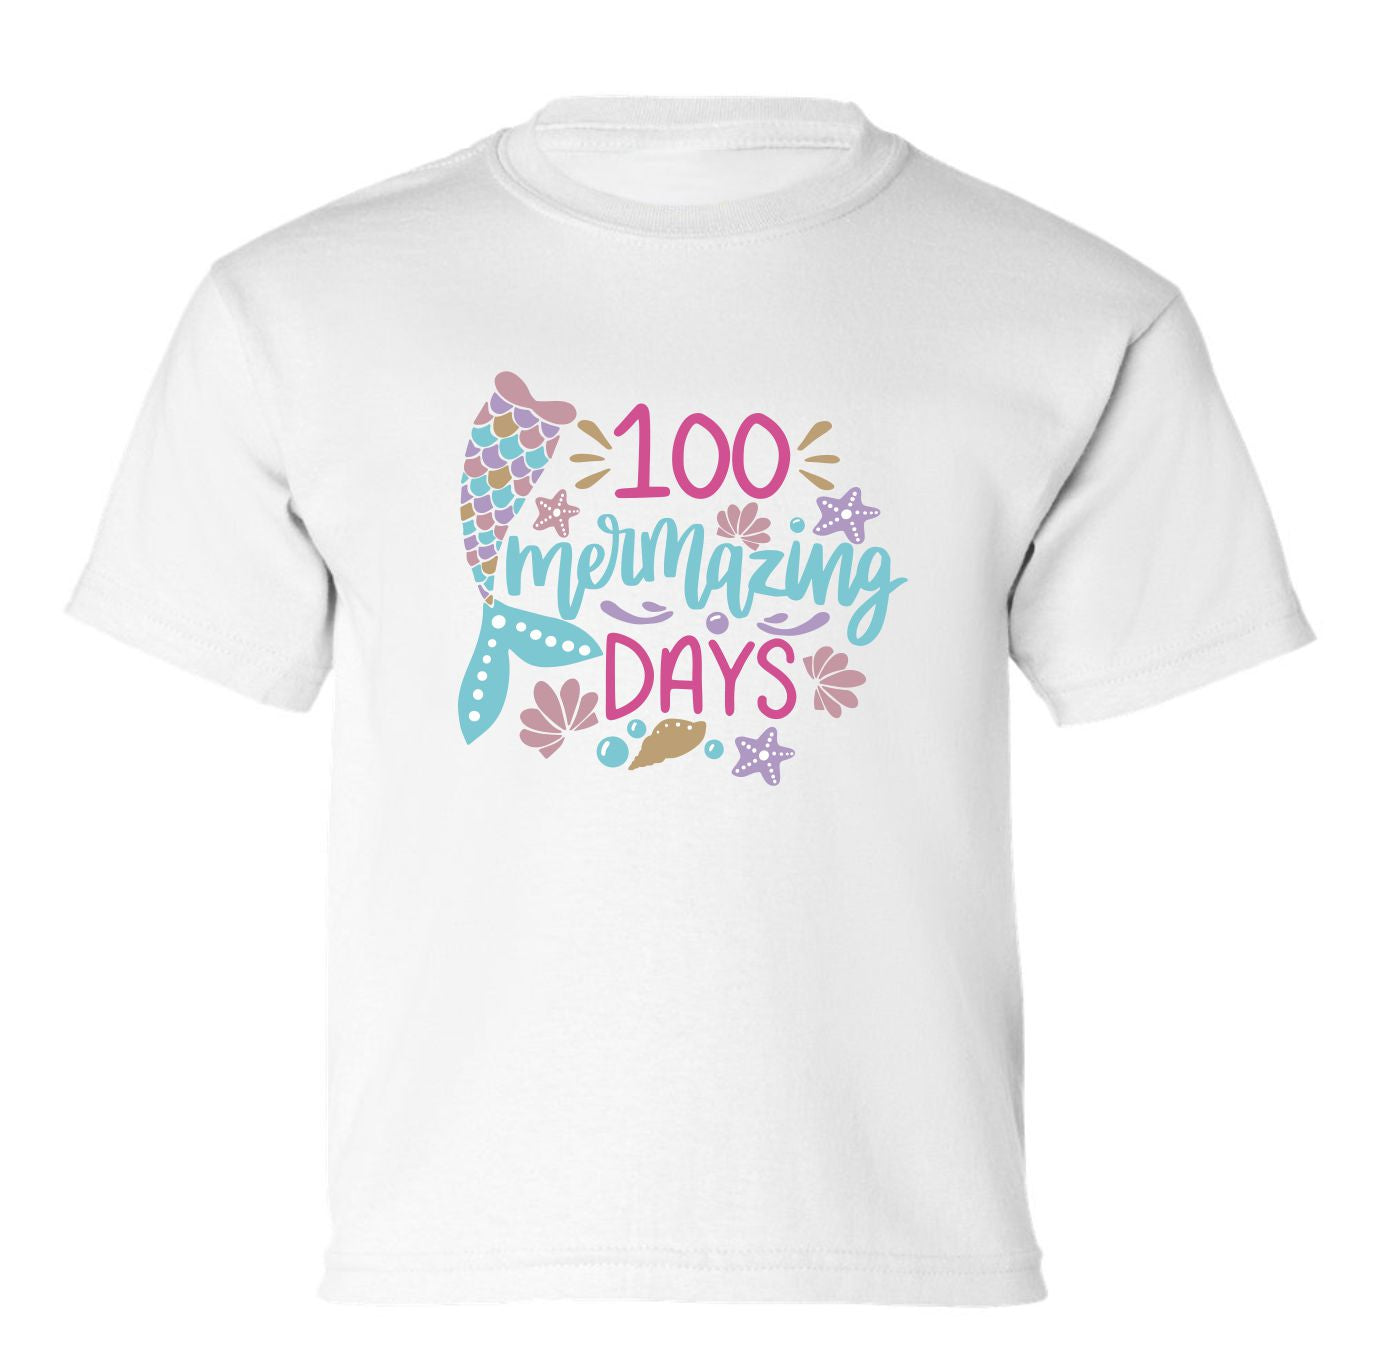 "100 Mermazing Days" (100 Days Of School) Toddler/Youth T-Shirt